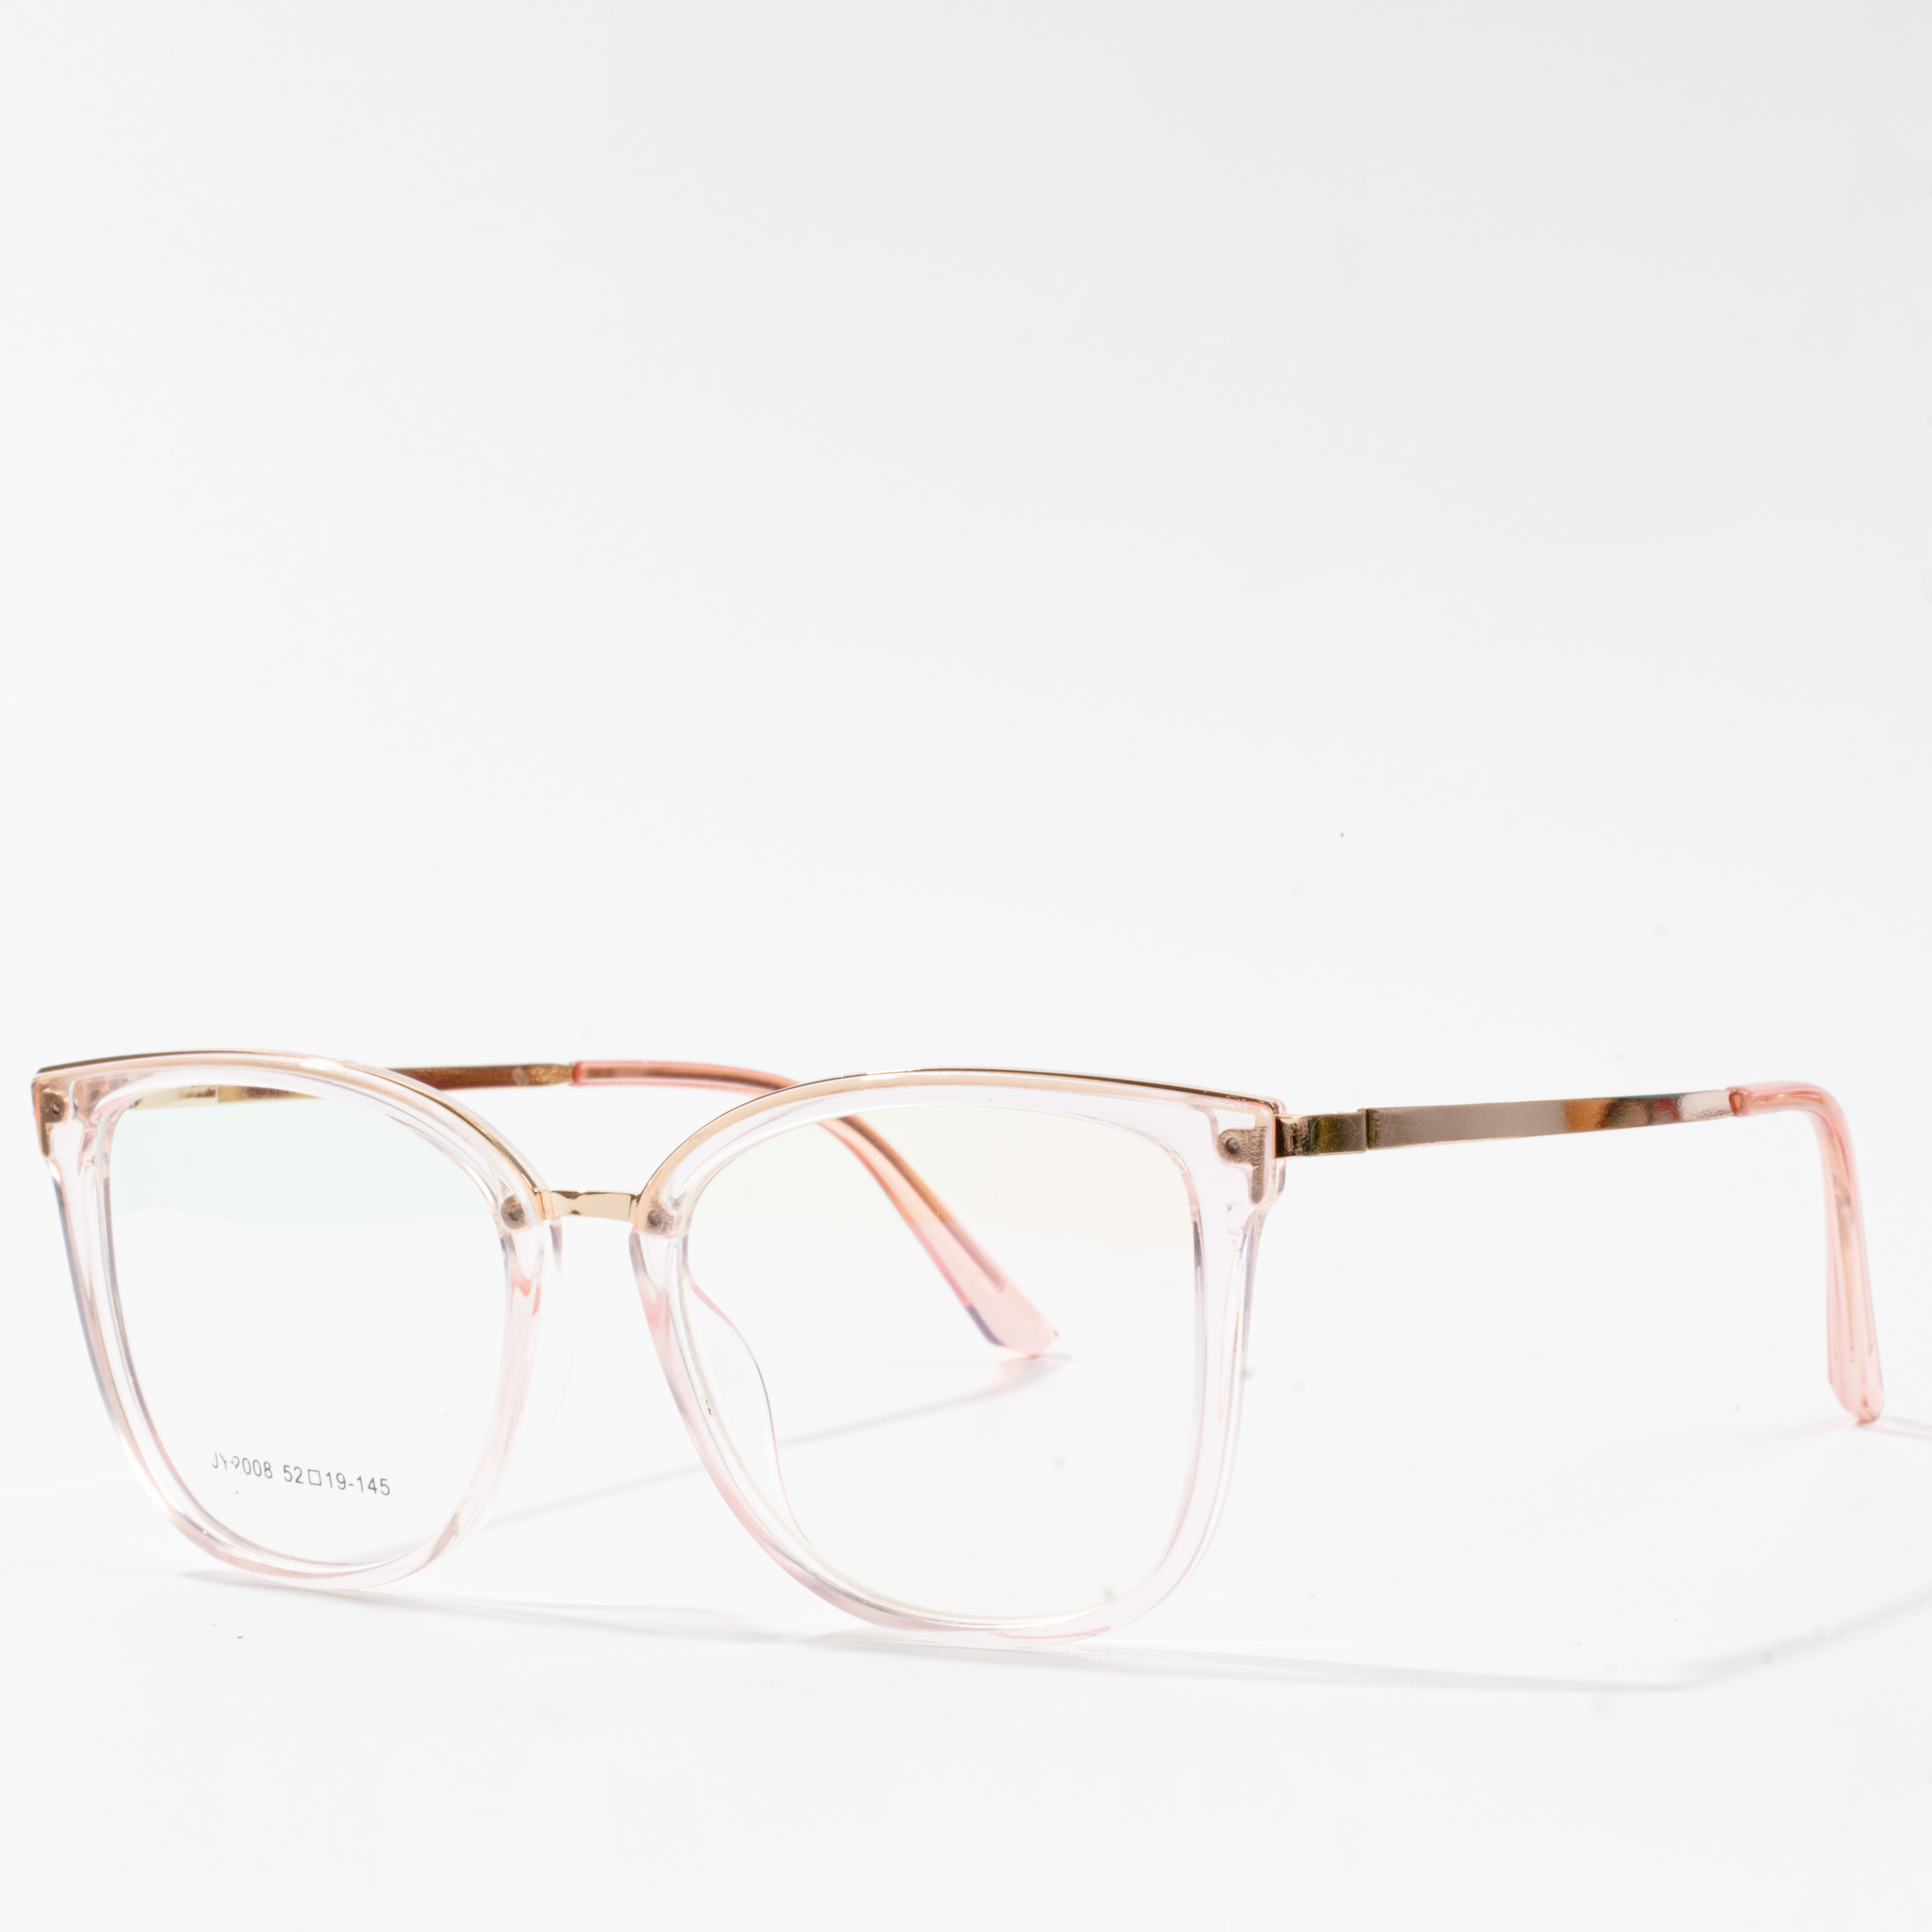 name brand eyeglass frames